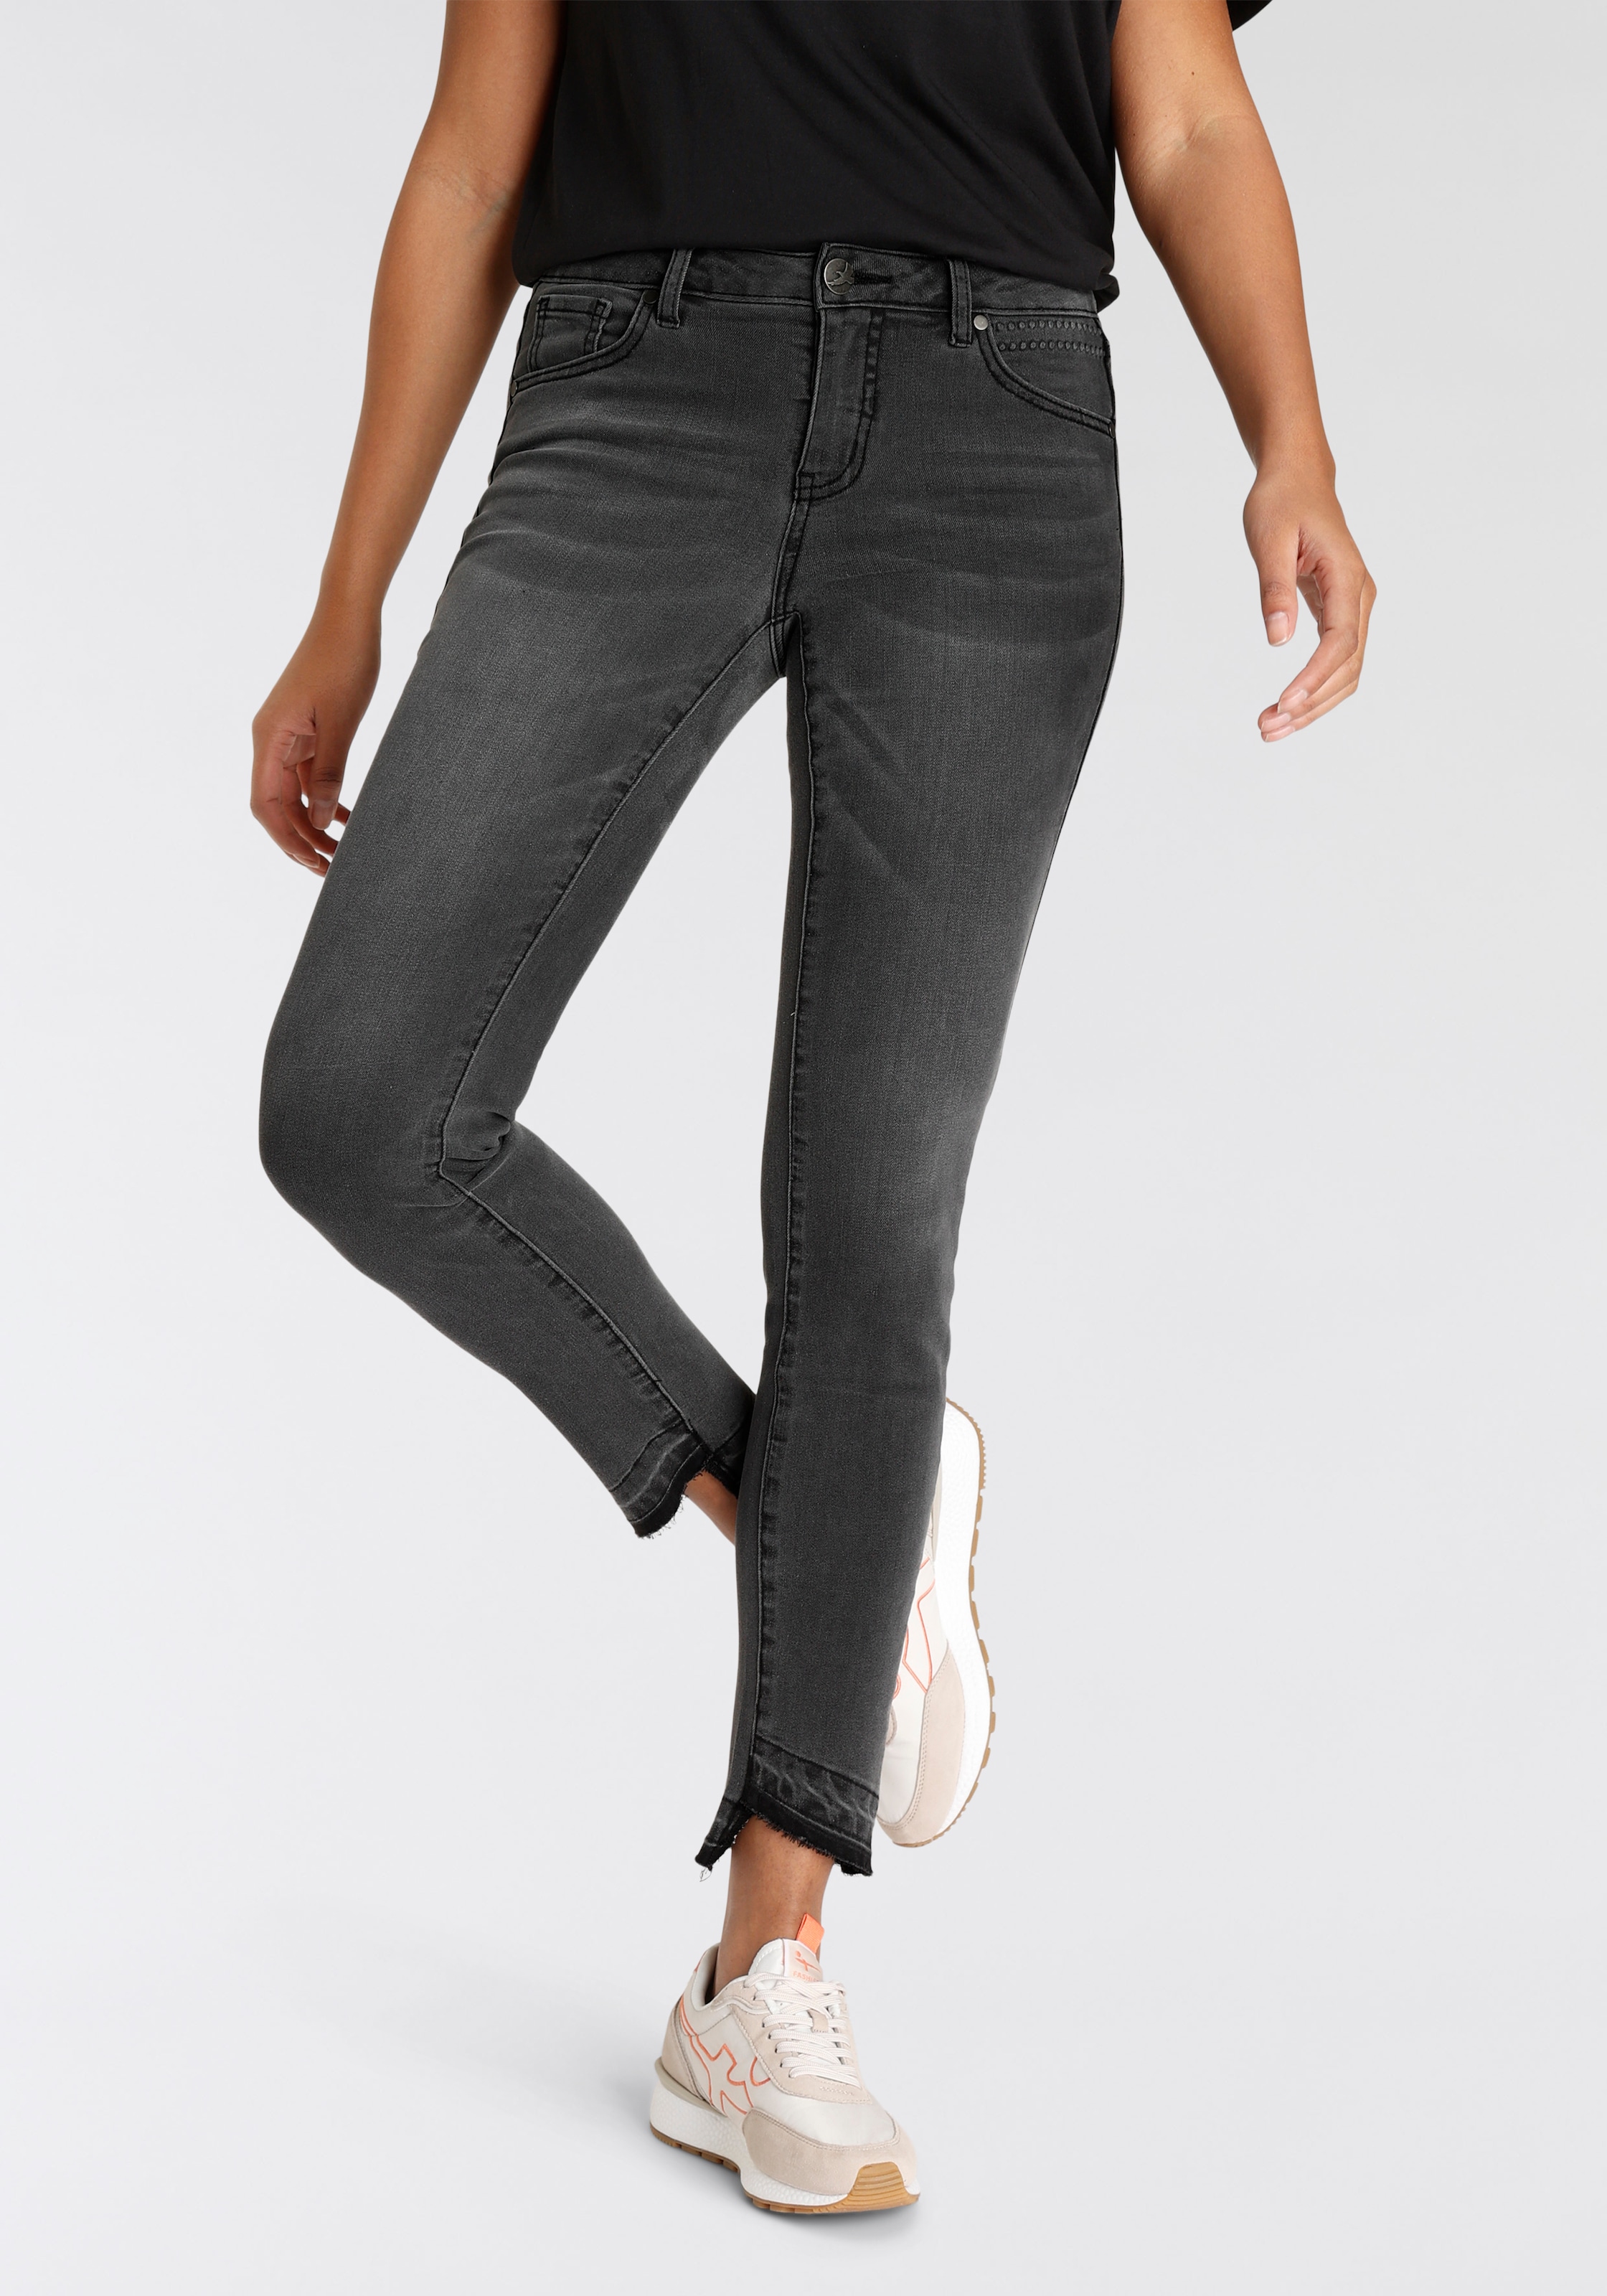 Kontrastsaum Mit Skinny-fit-Jeans, Arizona bestellen